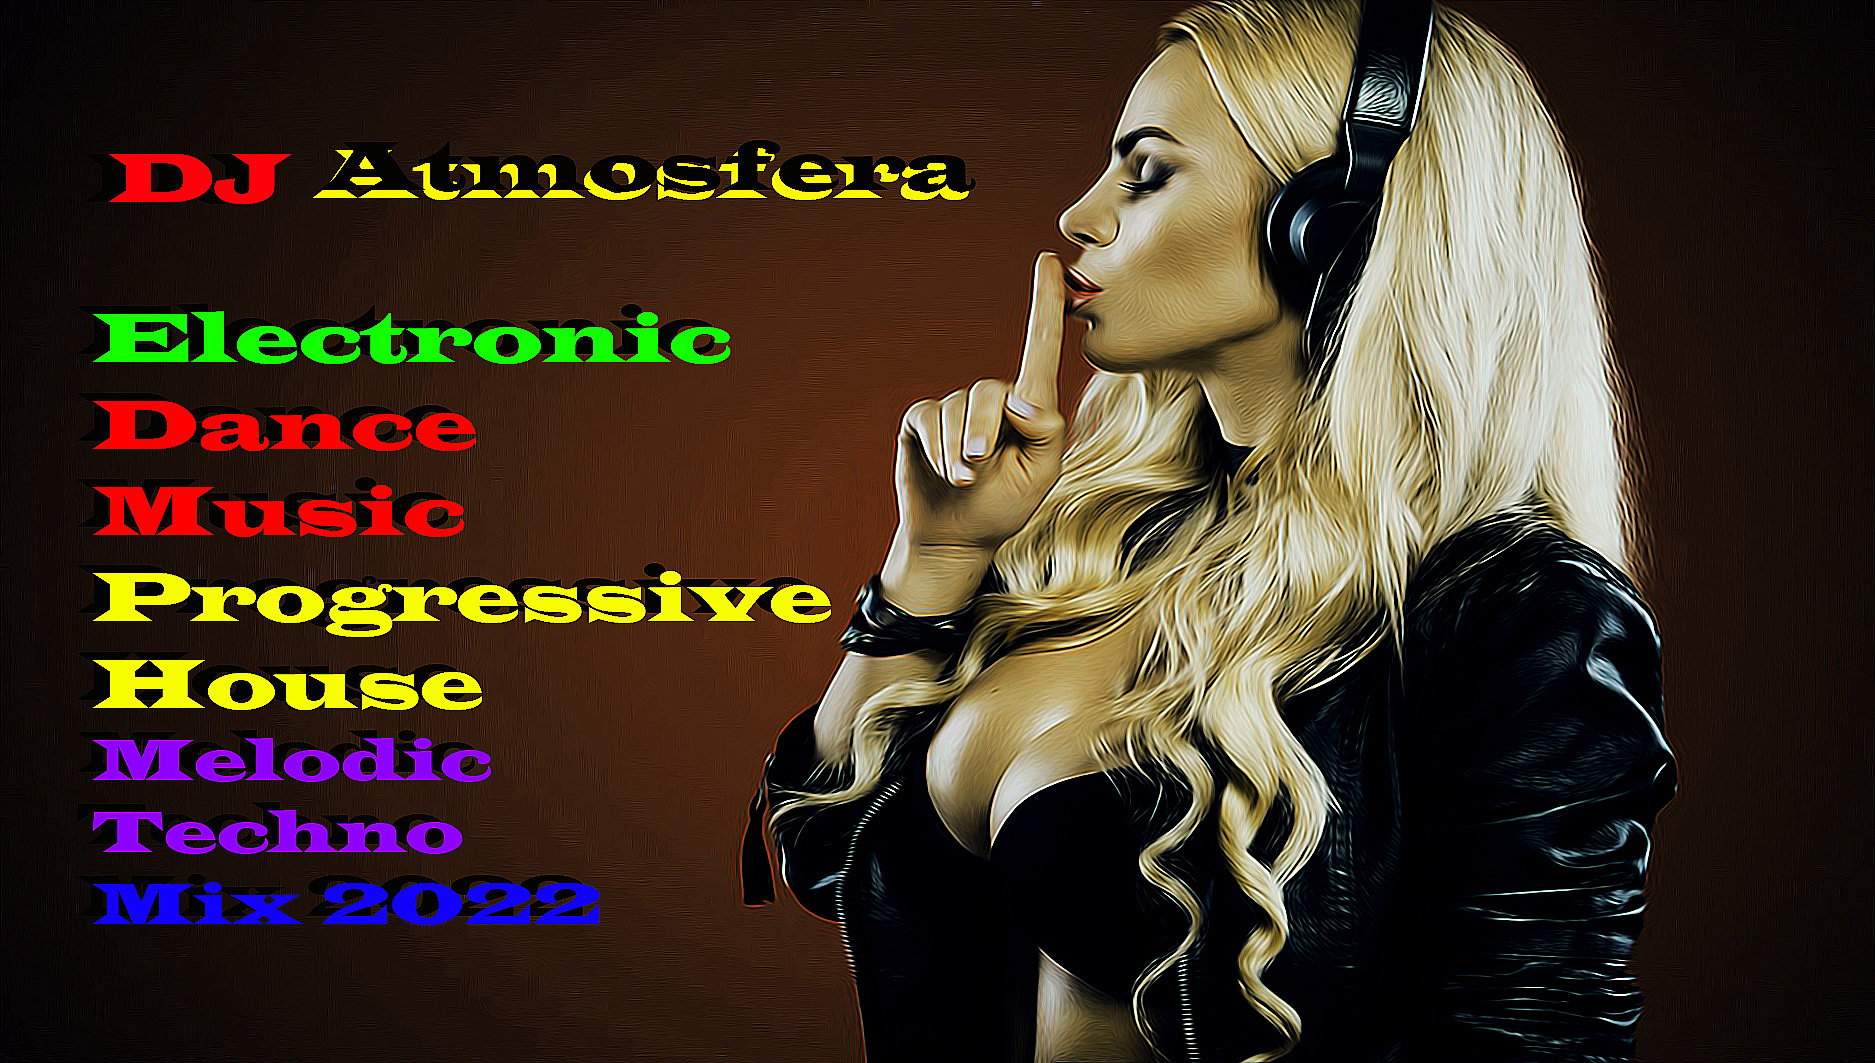 DJ Atmosfera / Electronic Dance Music,Progressive House,Melodic Techno 2022 / Прогрессив Хаус,.mp4